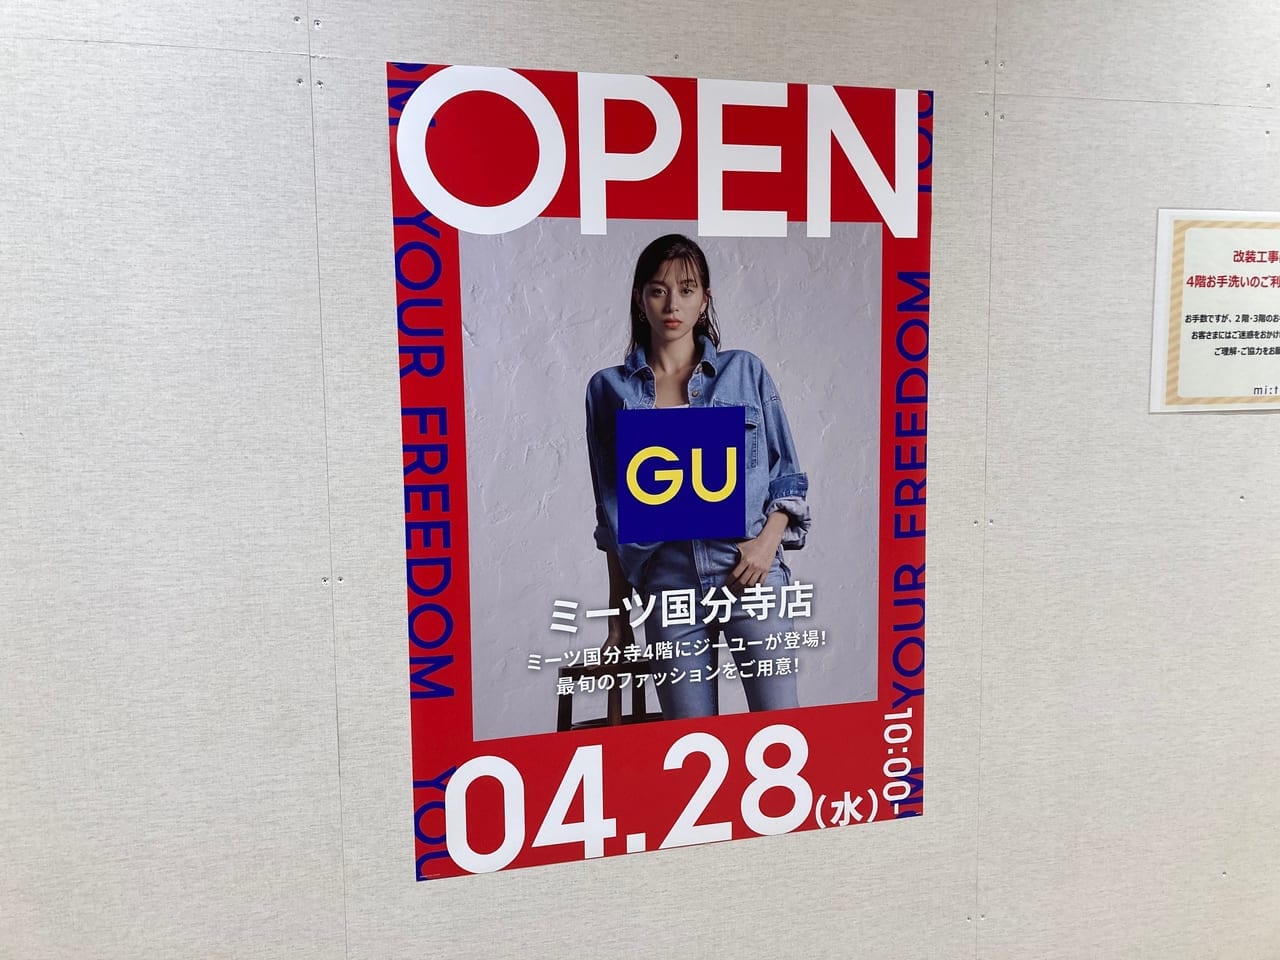 GUのオープンも延期。国分寺駅ビル商業施設の臨時休業についてのまとめ。